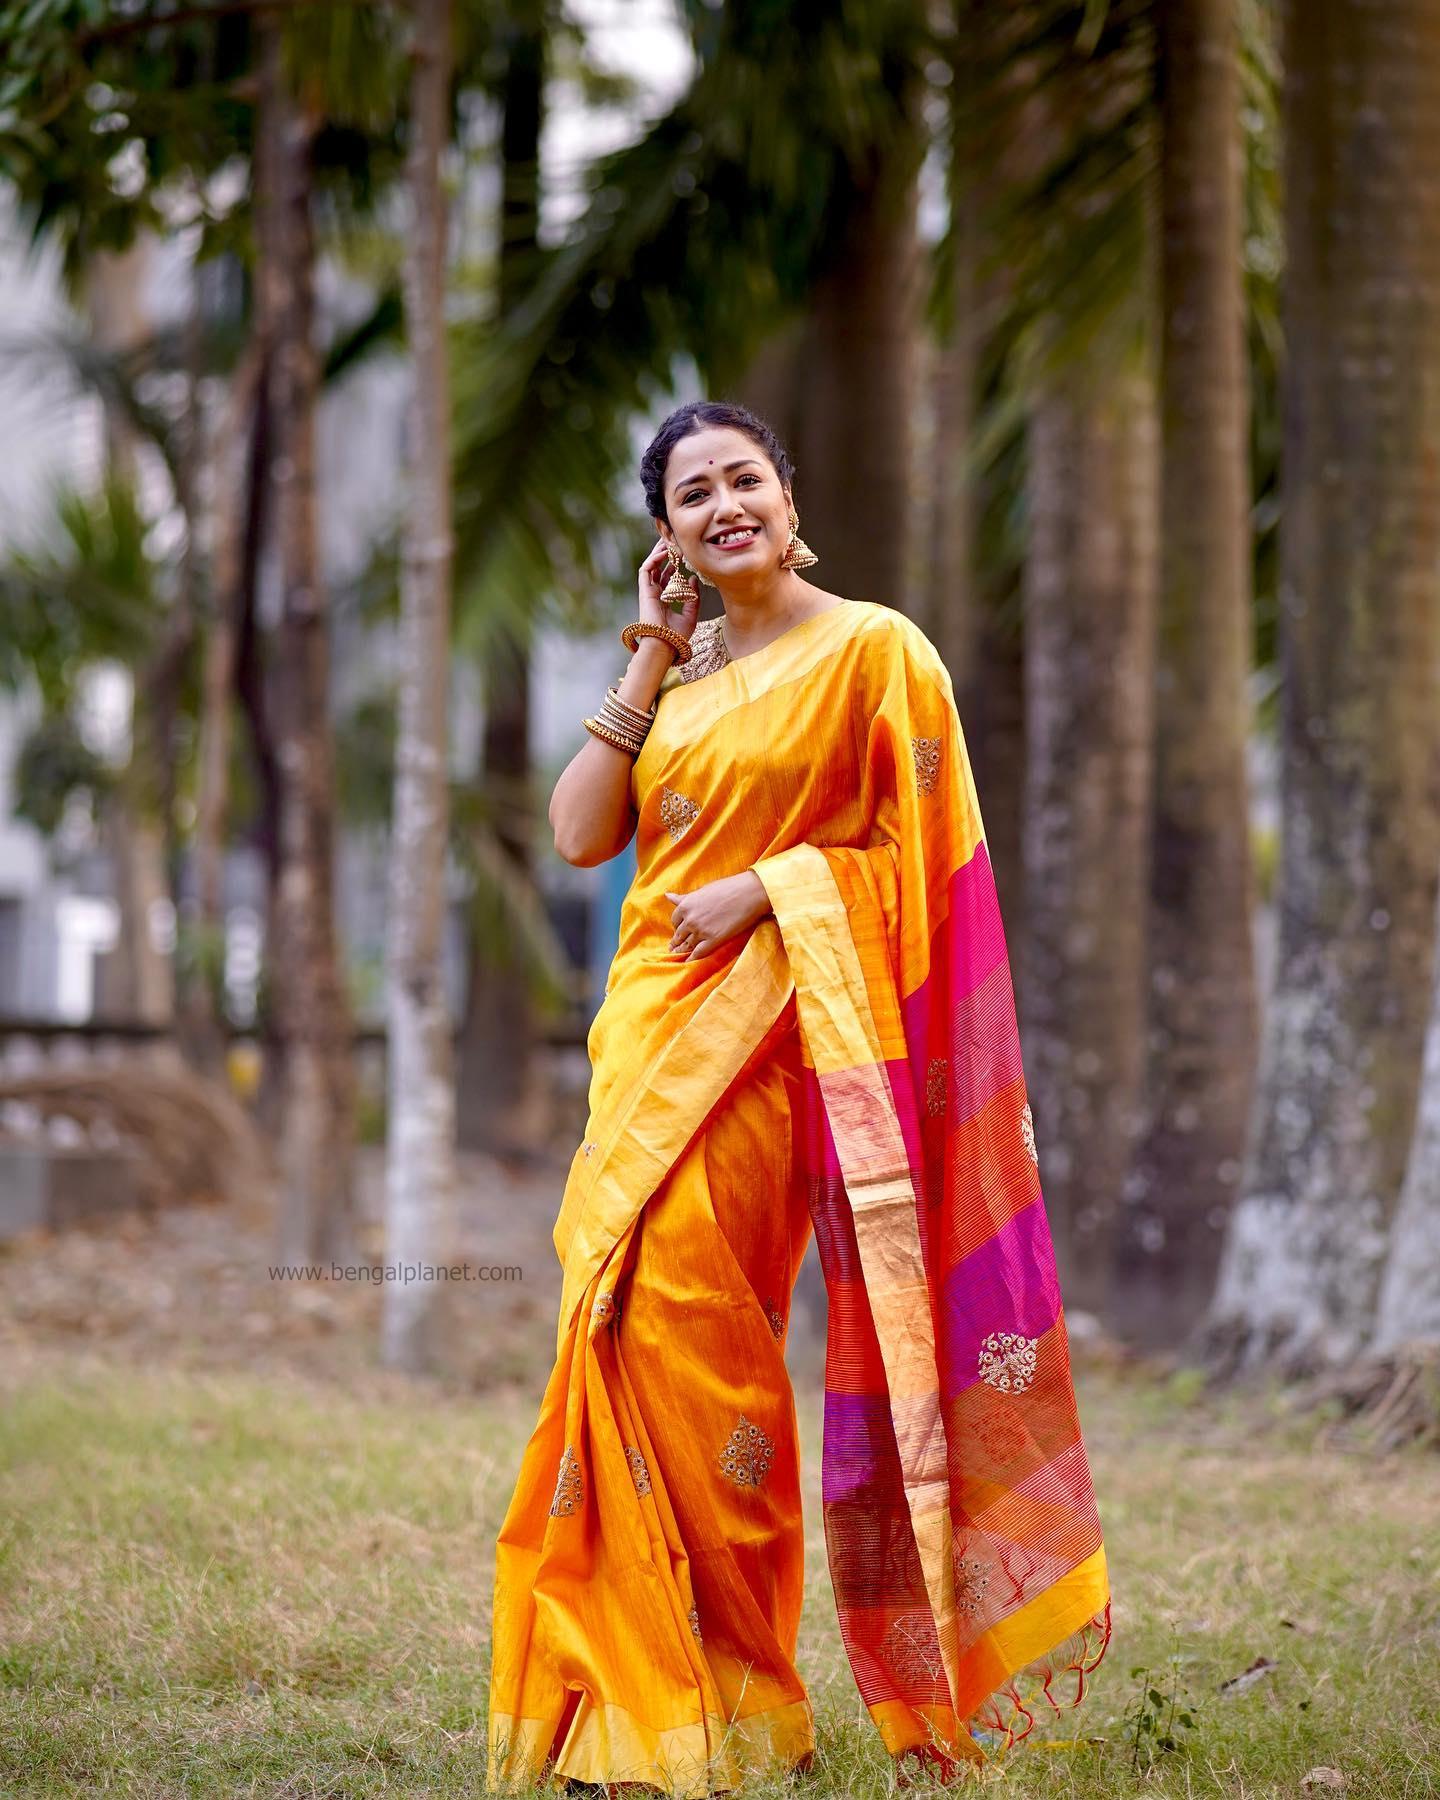 Sohini-Sarkar-cute-and-stunning-photoshoot-in-Saree-19-Bengalplanet.com